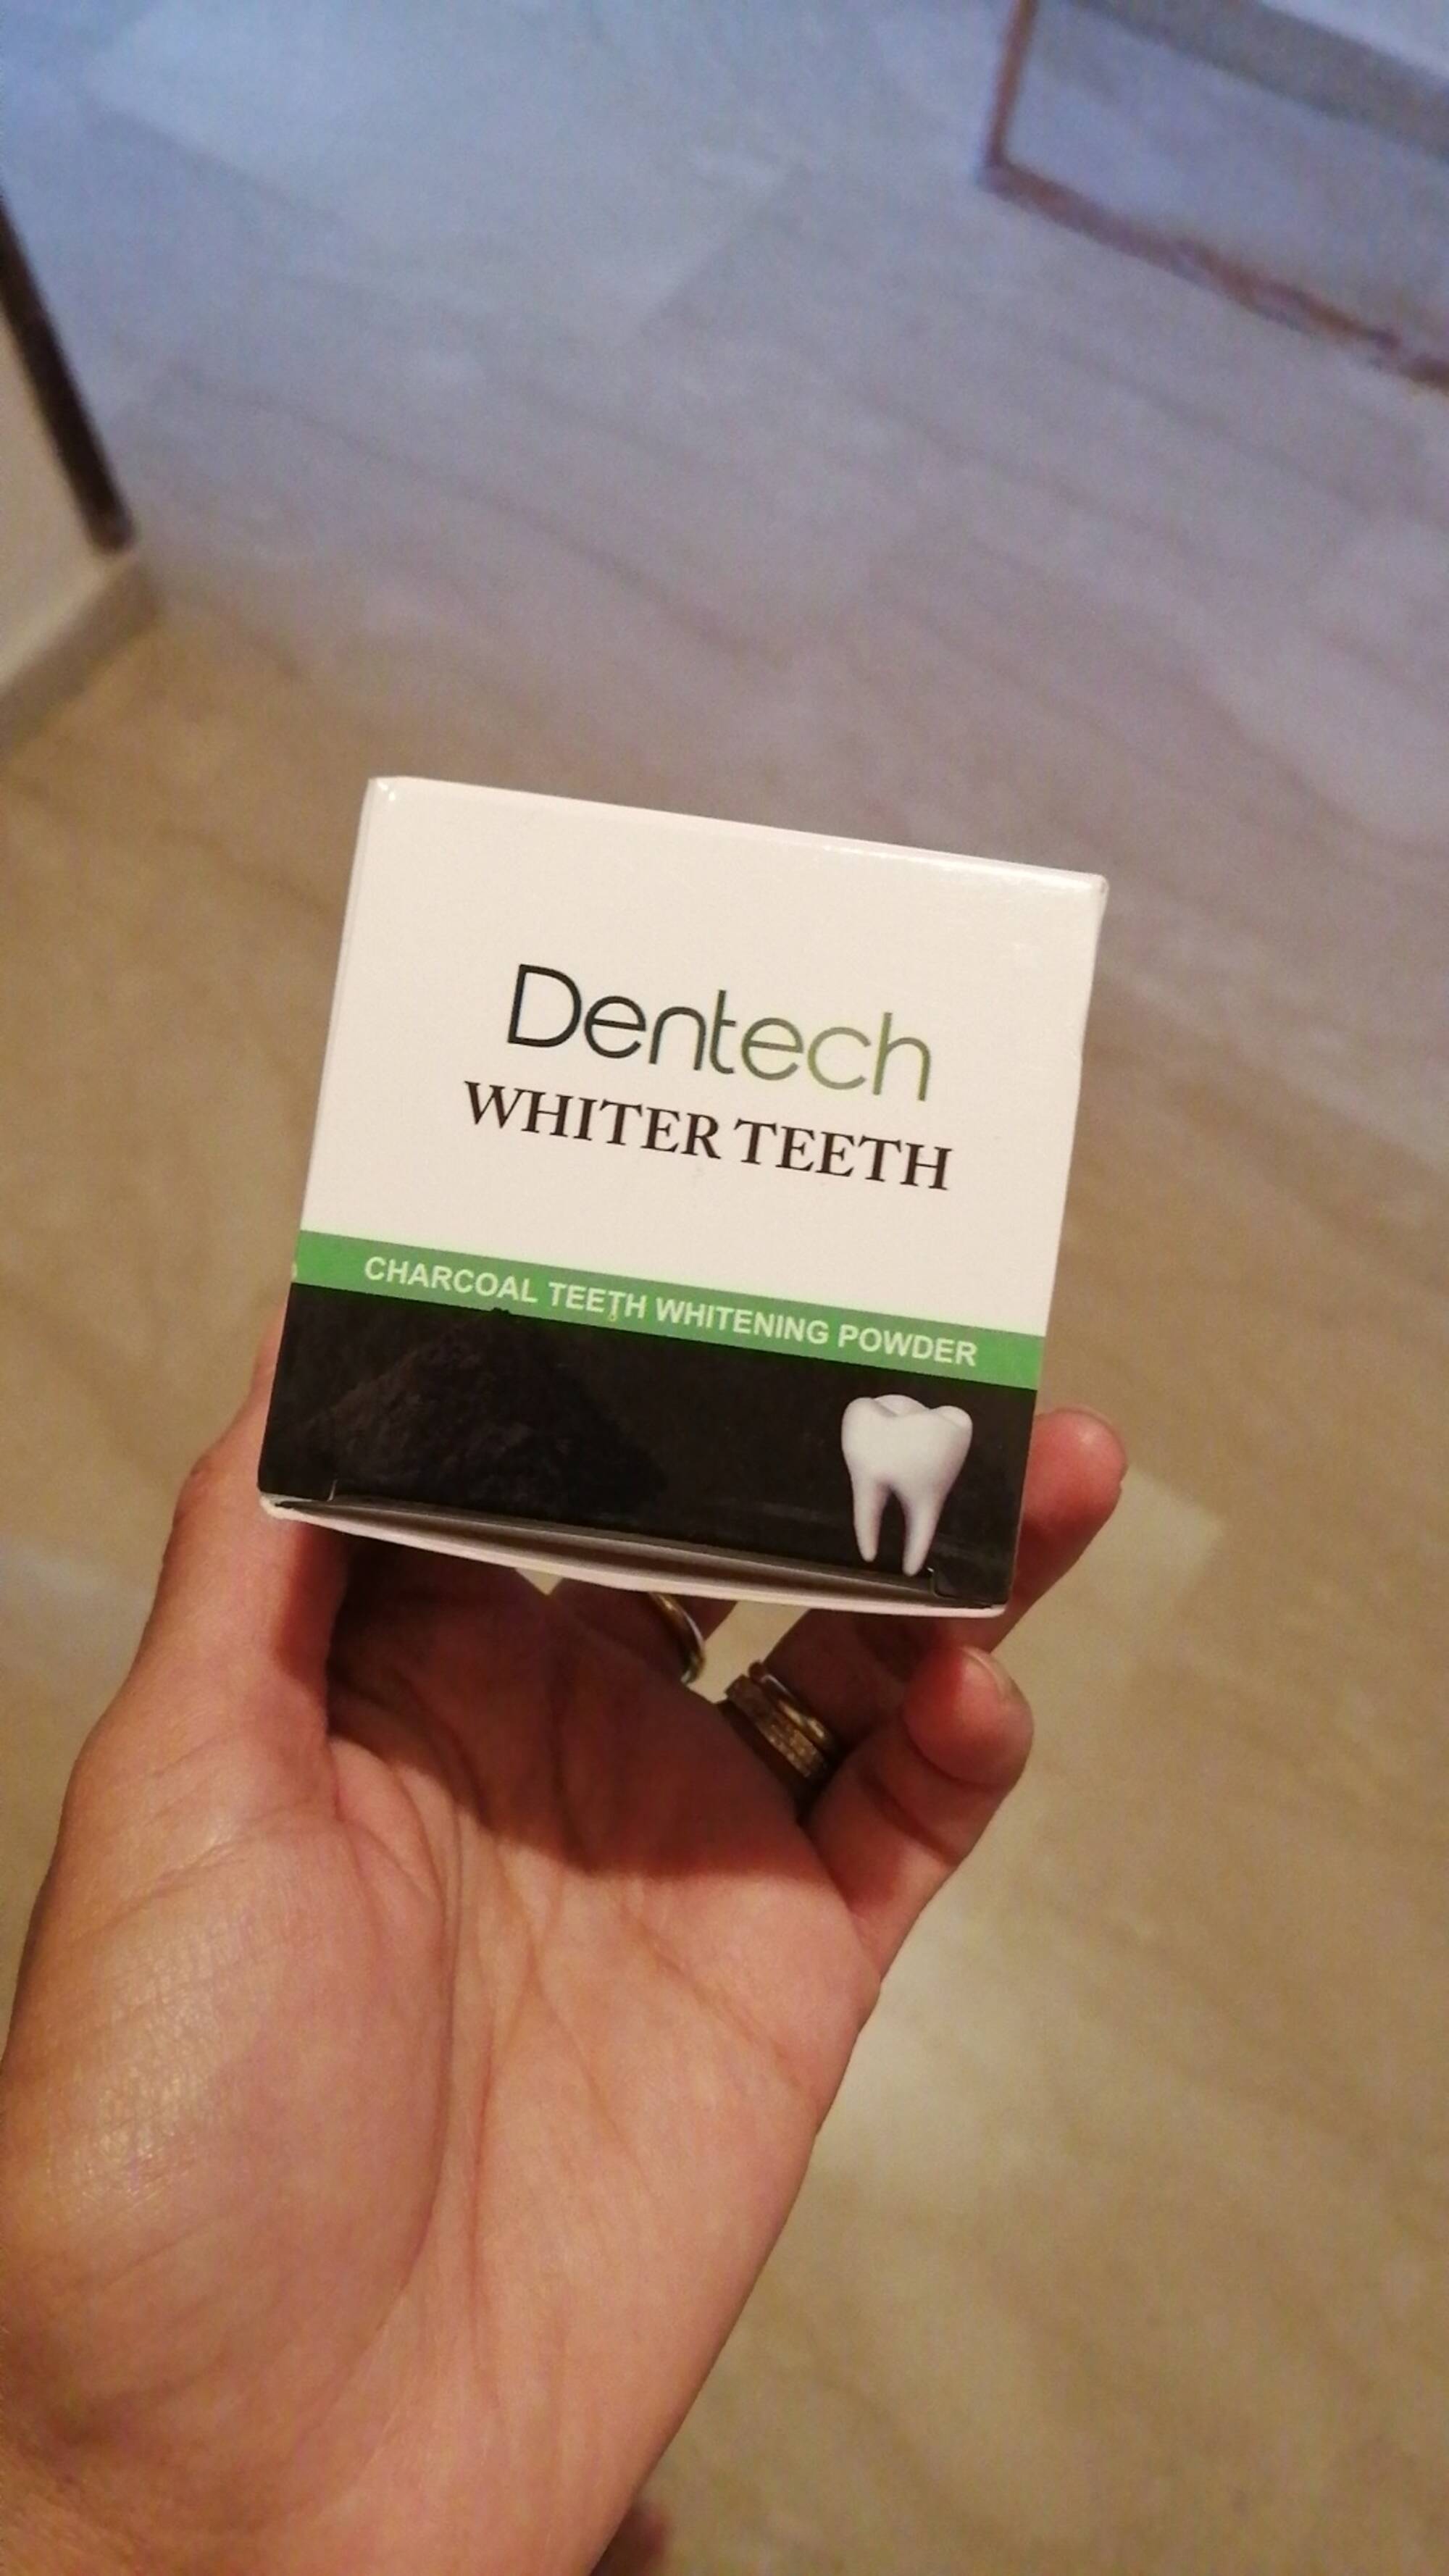 DENTECH - Whiter teeth - Charcoal teeth whitening powder